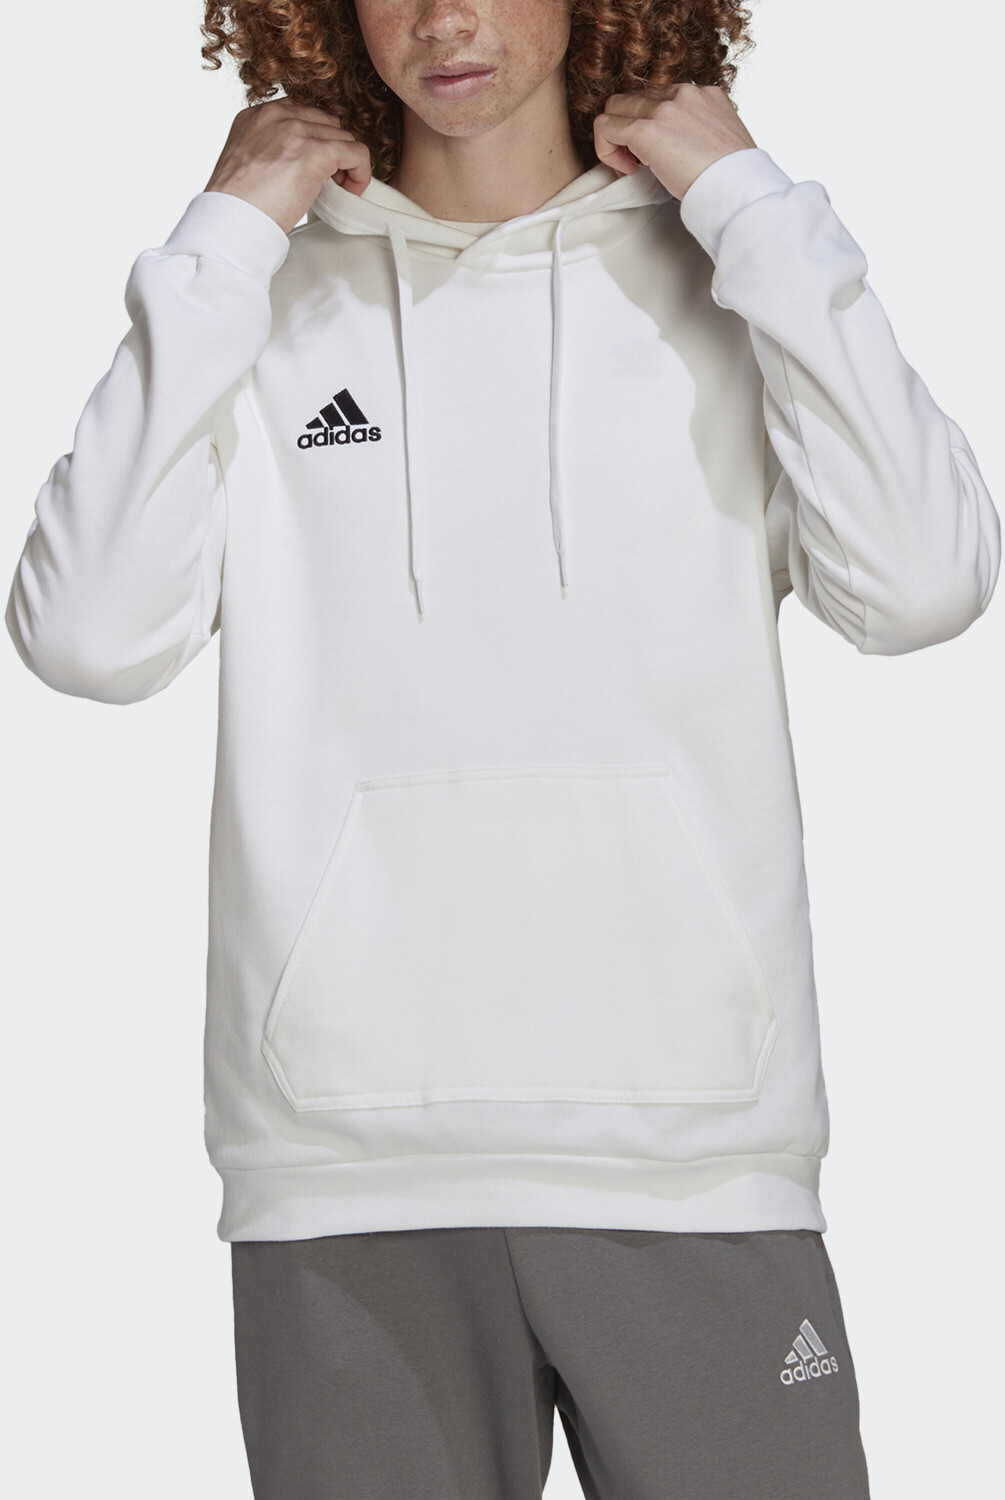 Adidas Football Sweat 22 € | Hoodie (HG6302) ab Entrada Preisvergleich 23,45 white bei